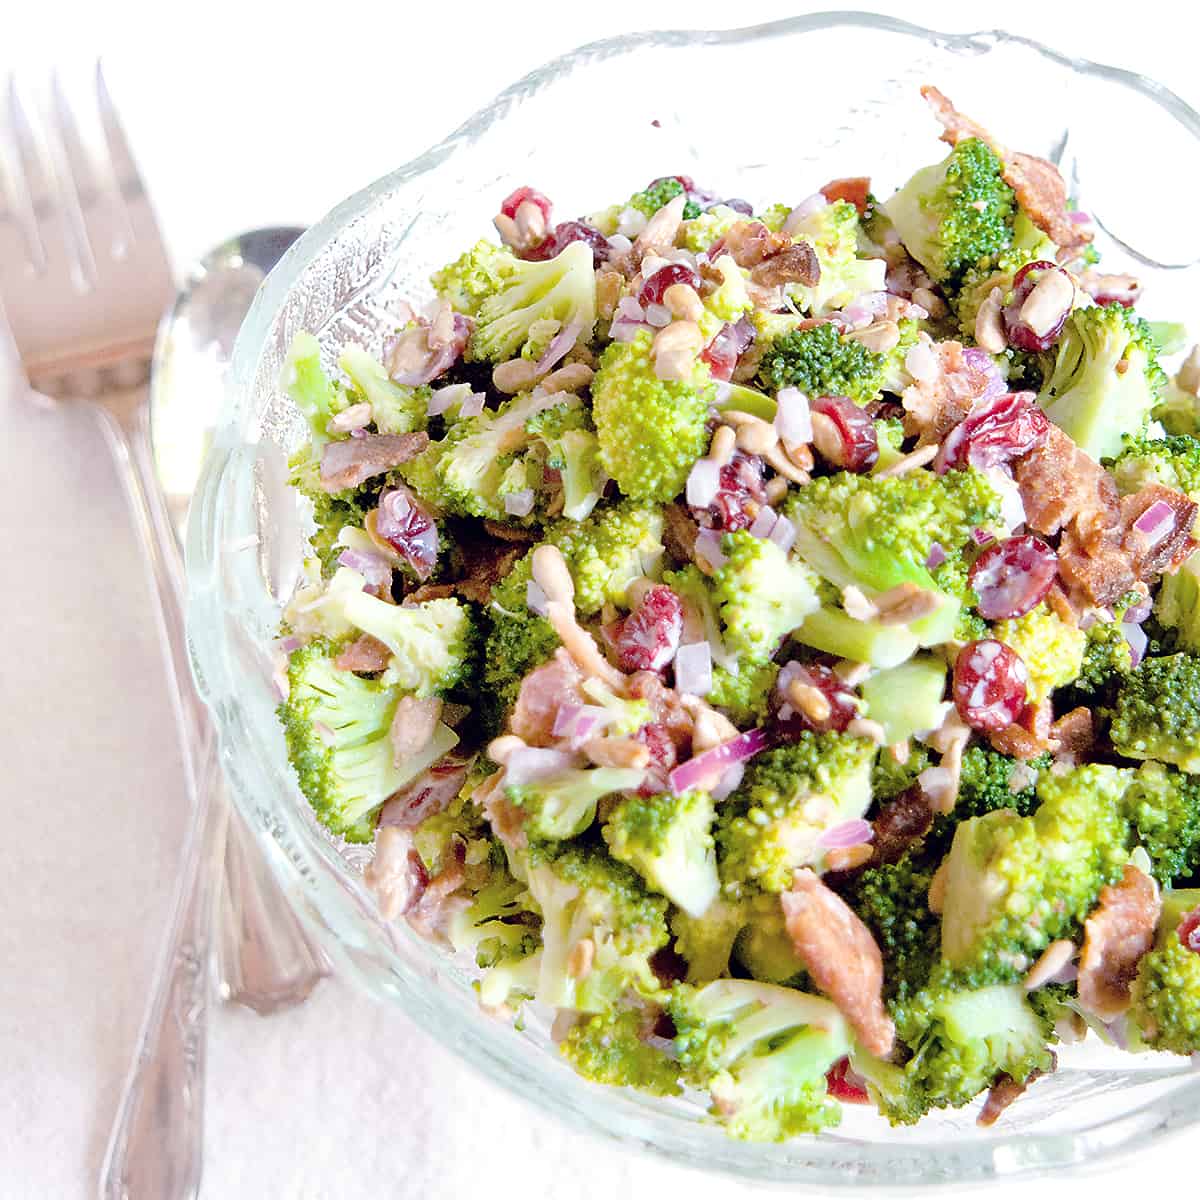 Broccoli Salad in a glass serving bowl with vintage serving utensils.